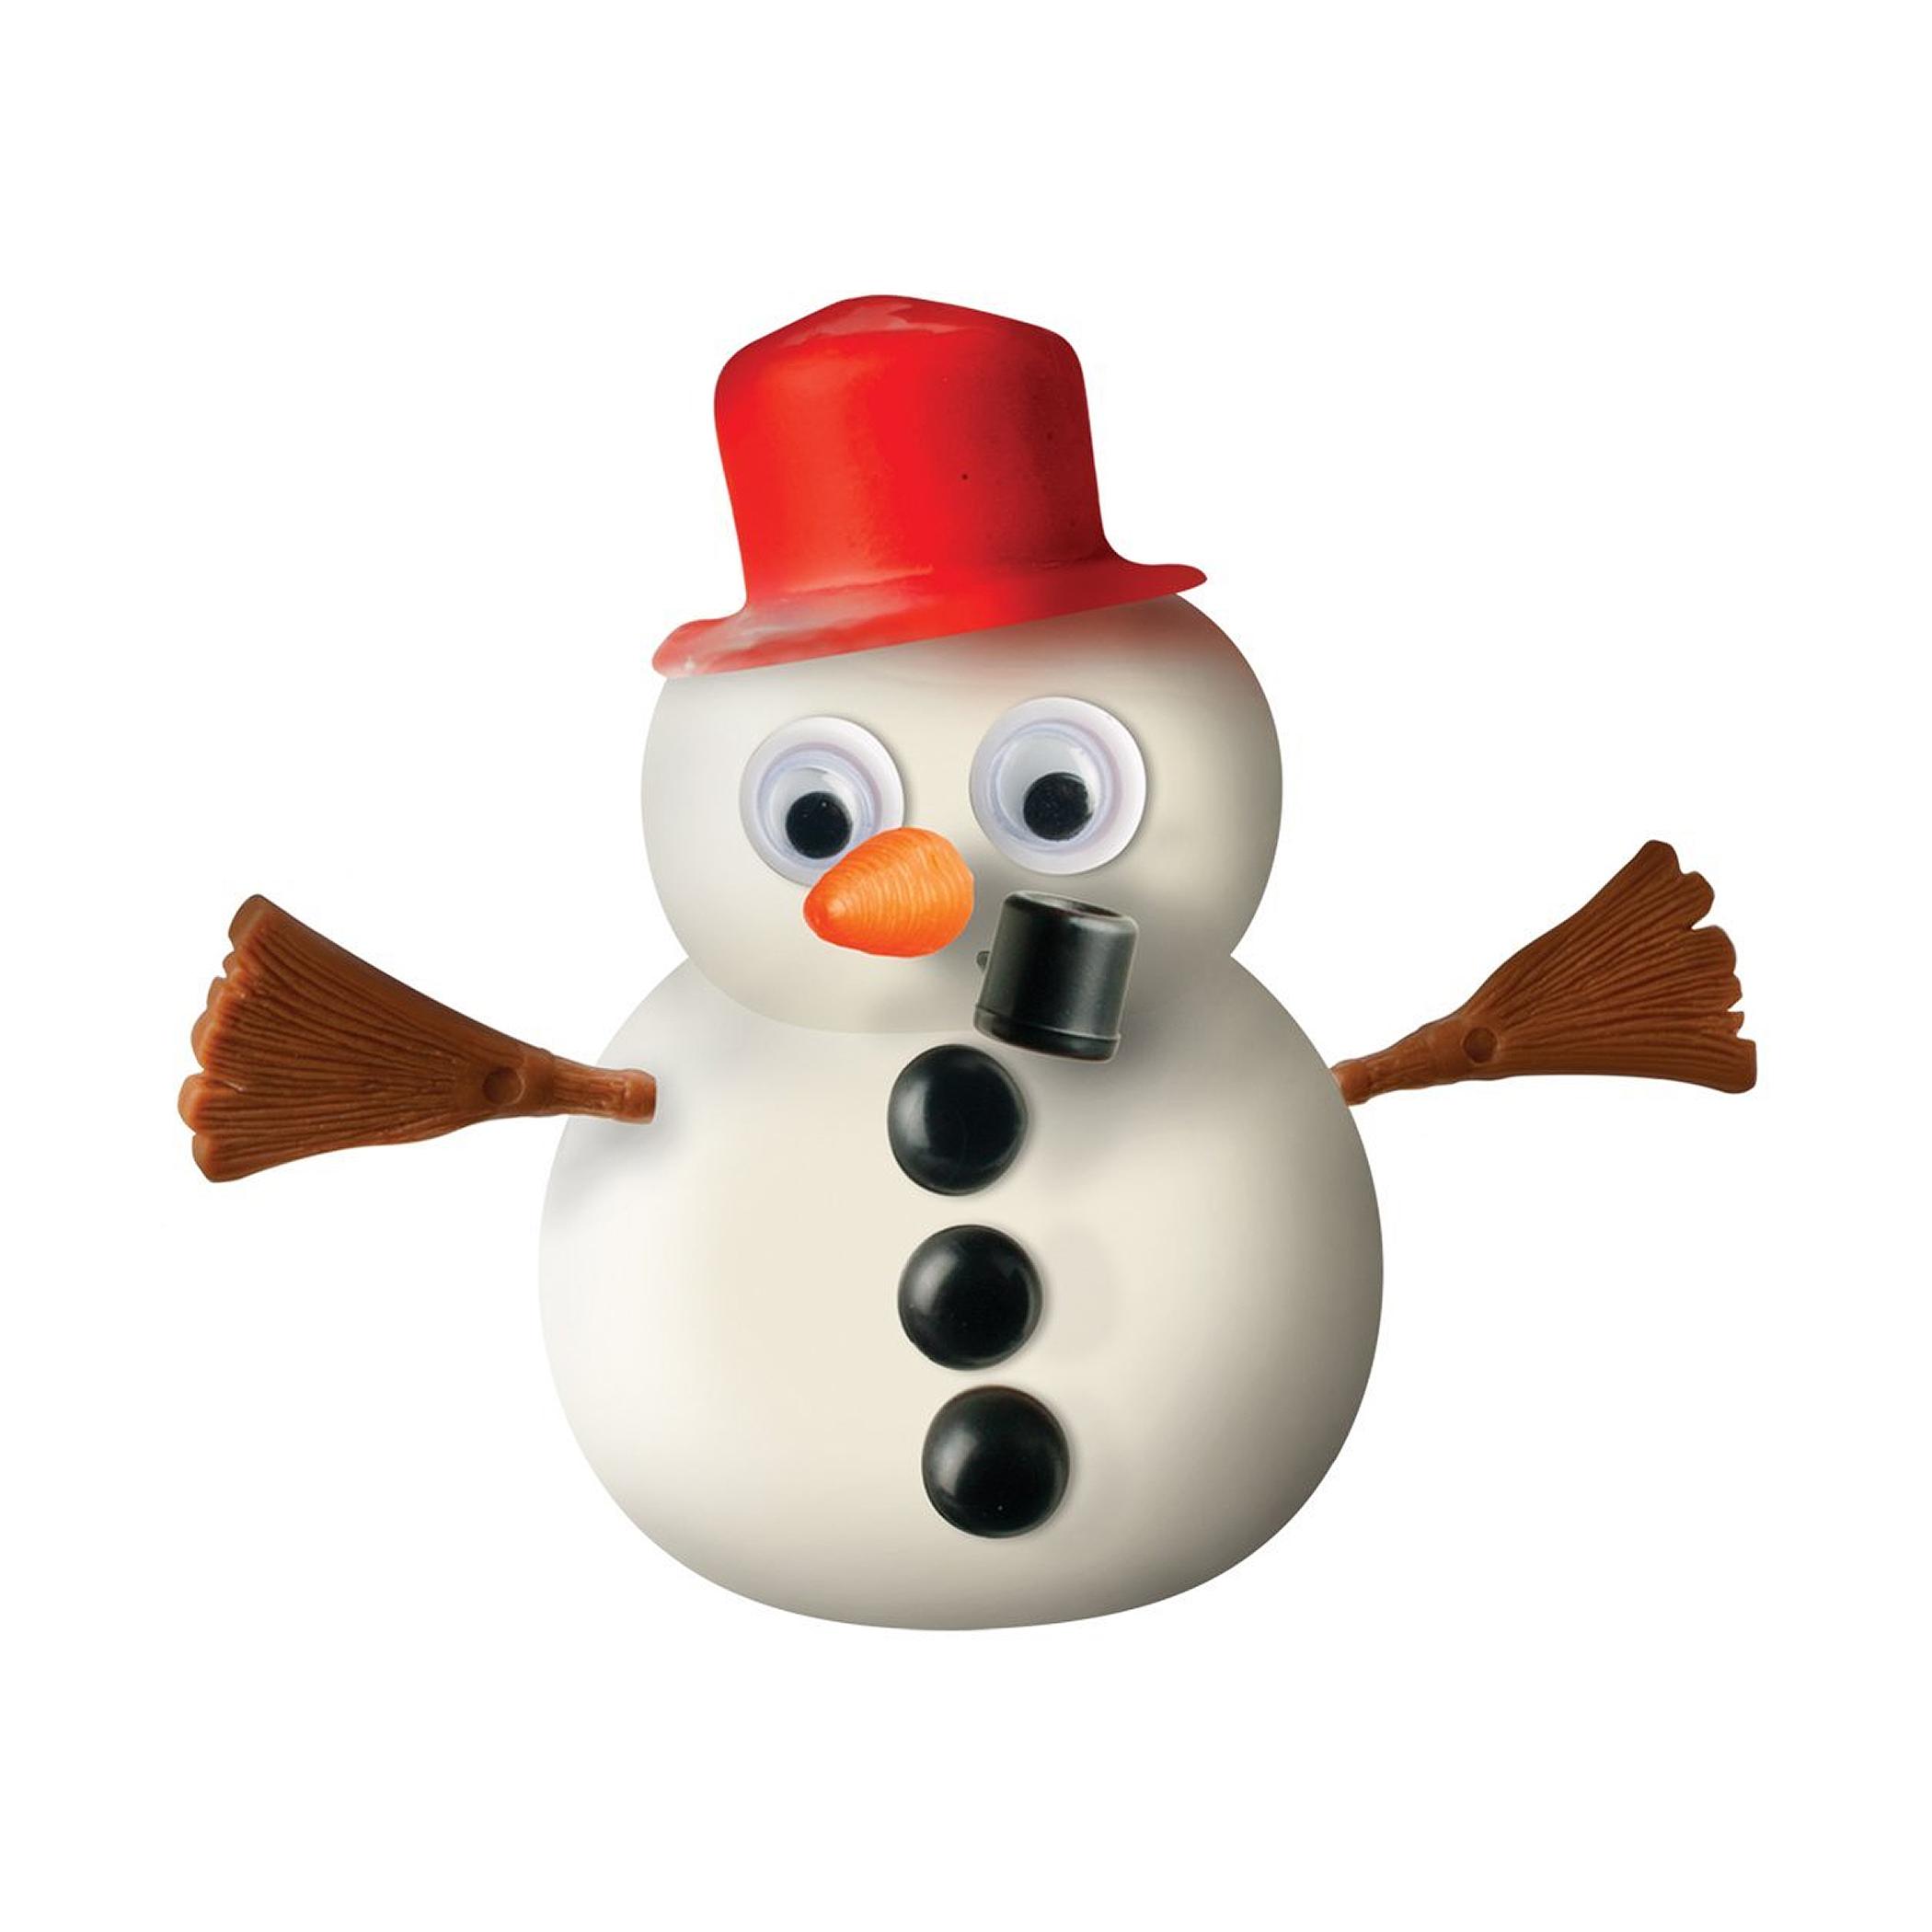 Build Your Own Snowman Kit Reusable Accessories To Dress A Snowman